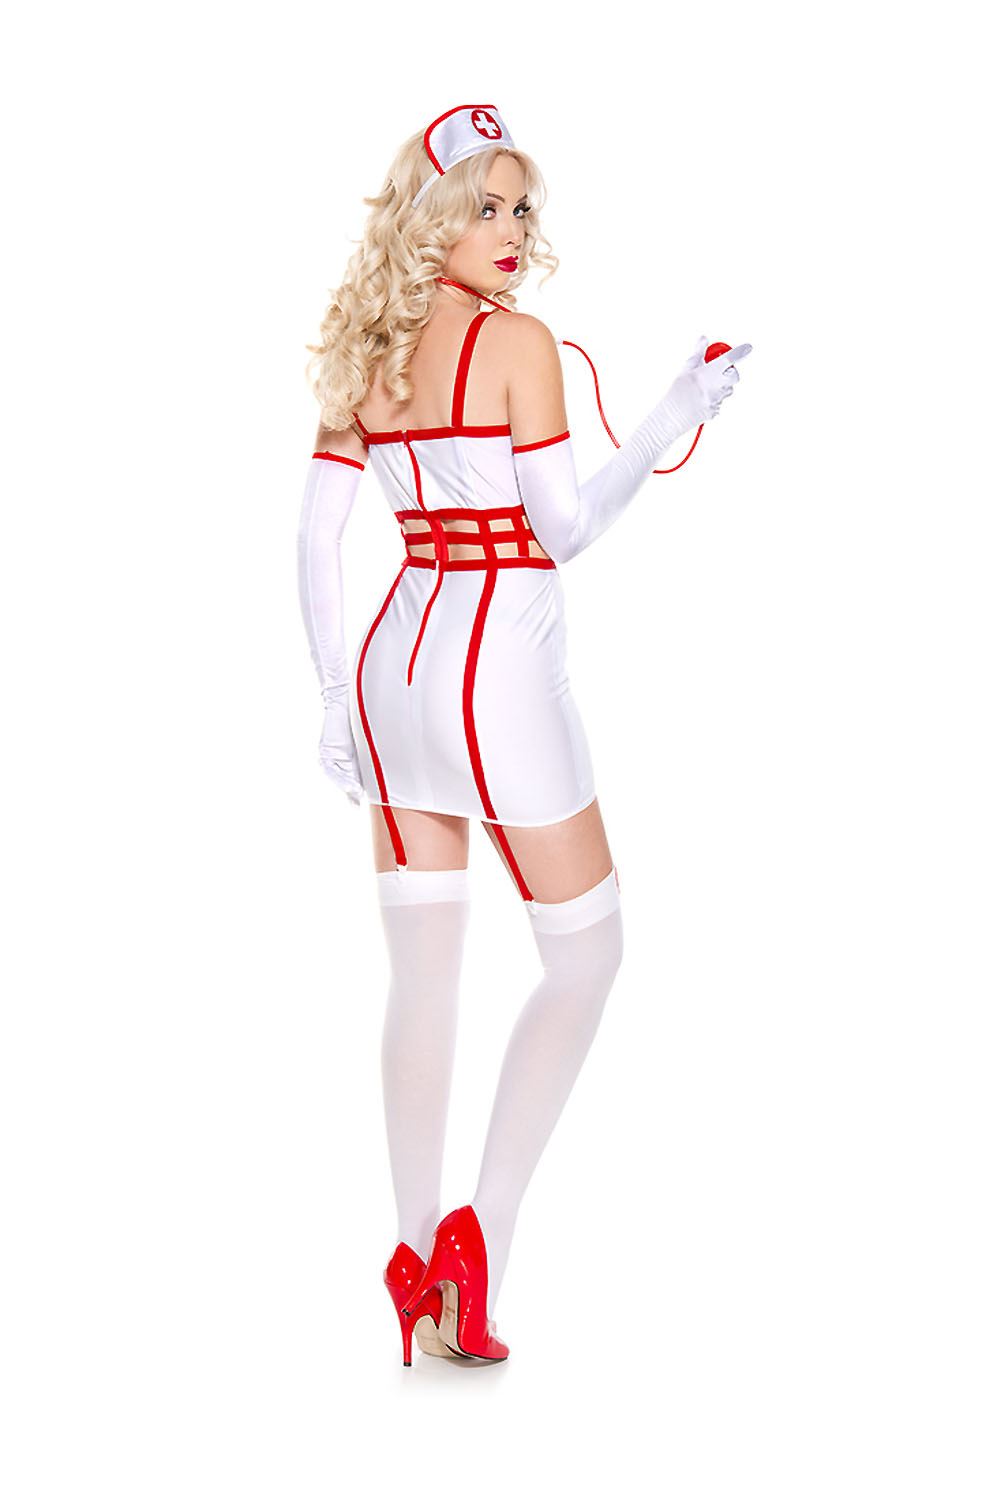 Adult Caged Nurse Woman Costume $42.99 The Costume Land.